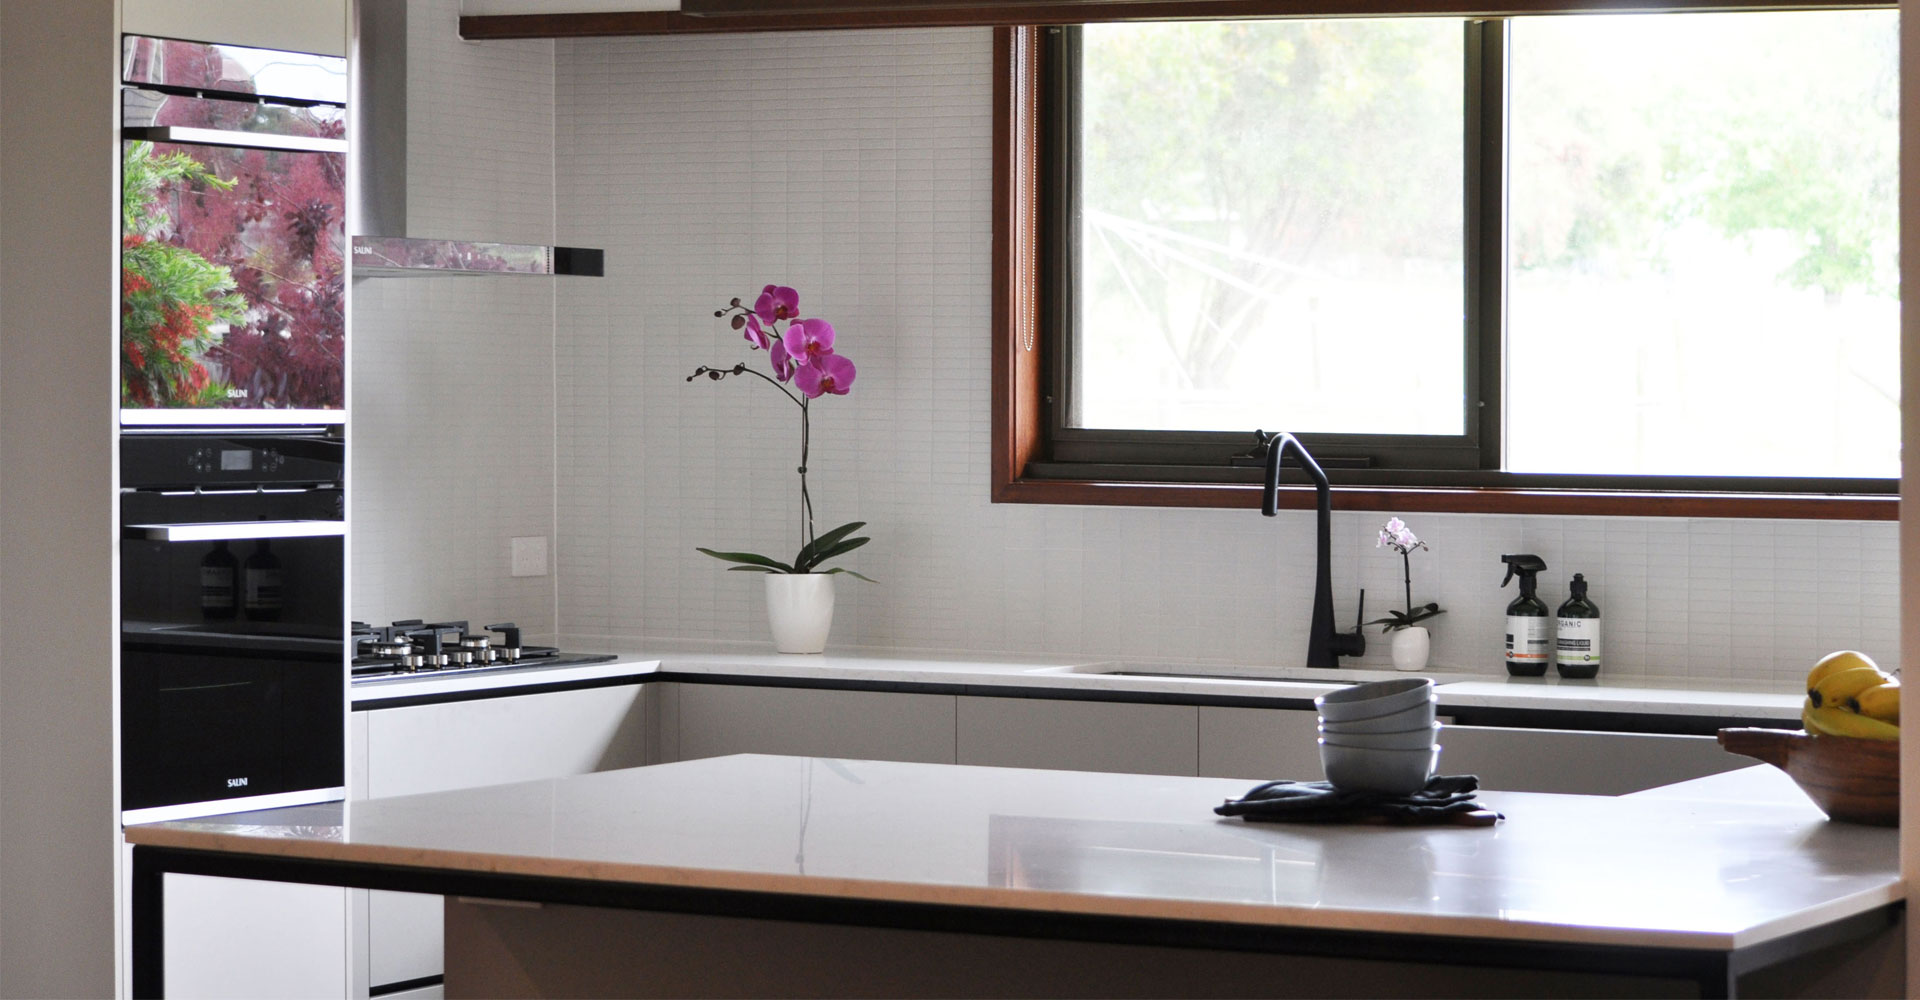 Kitchen And Bathroom Renovations Melbourne Professionals